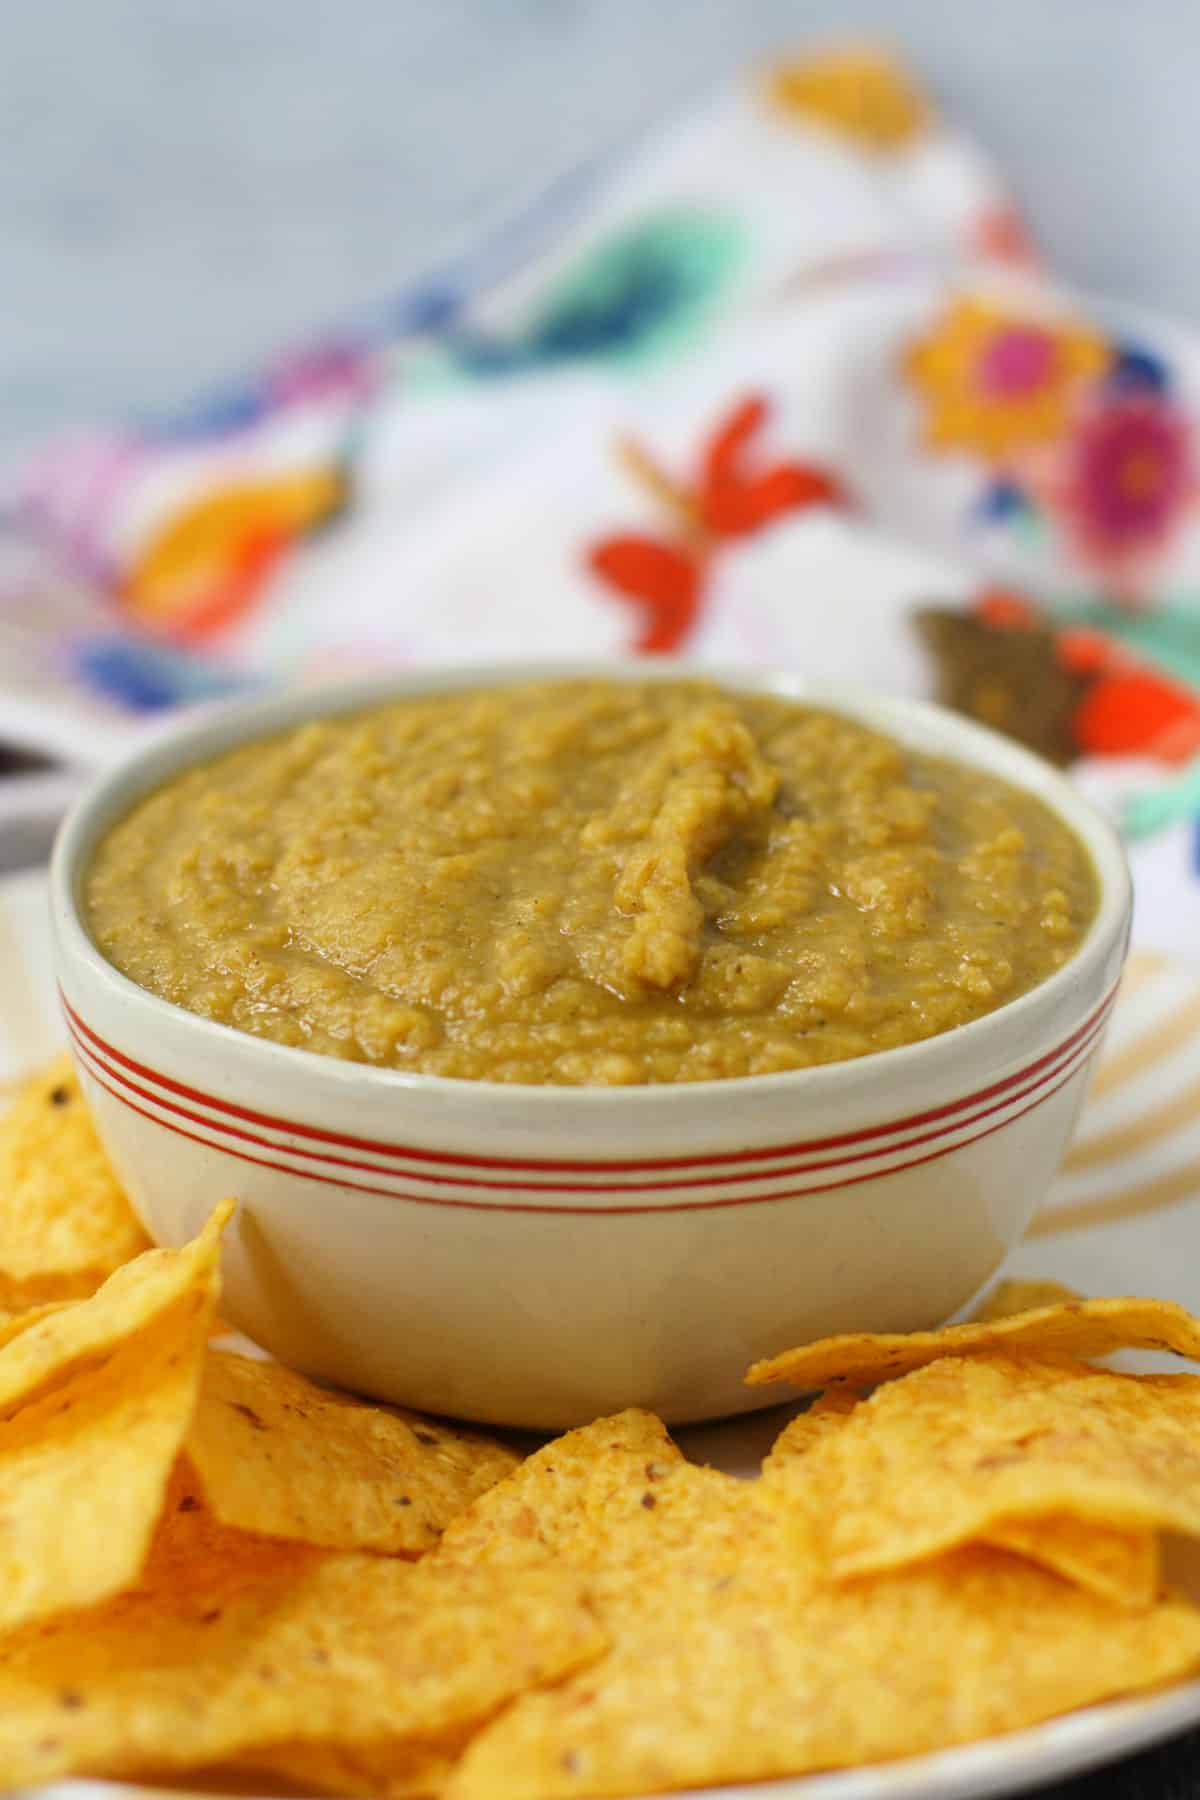 vegan curried lentil dip in a bowl